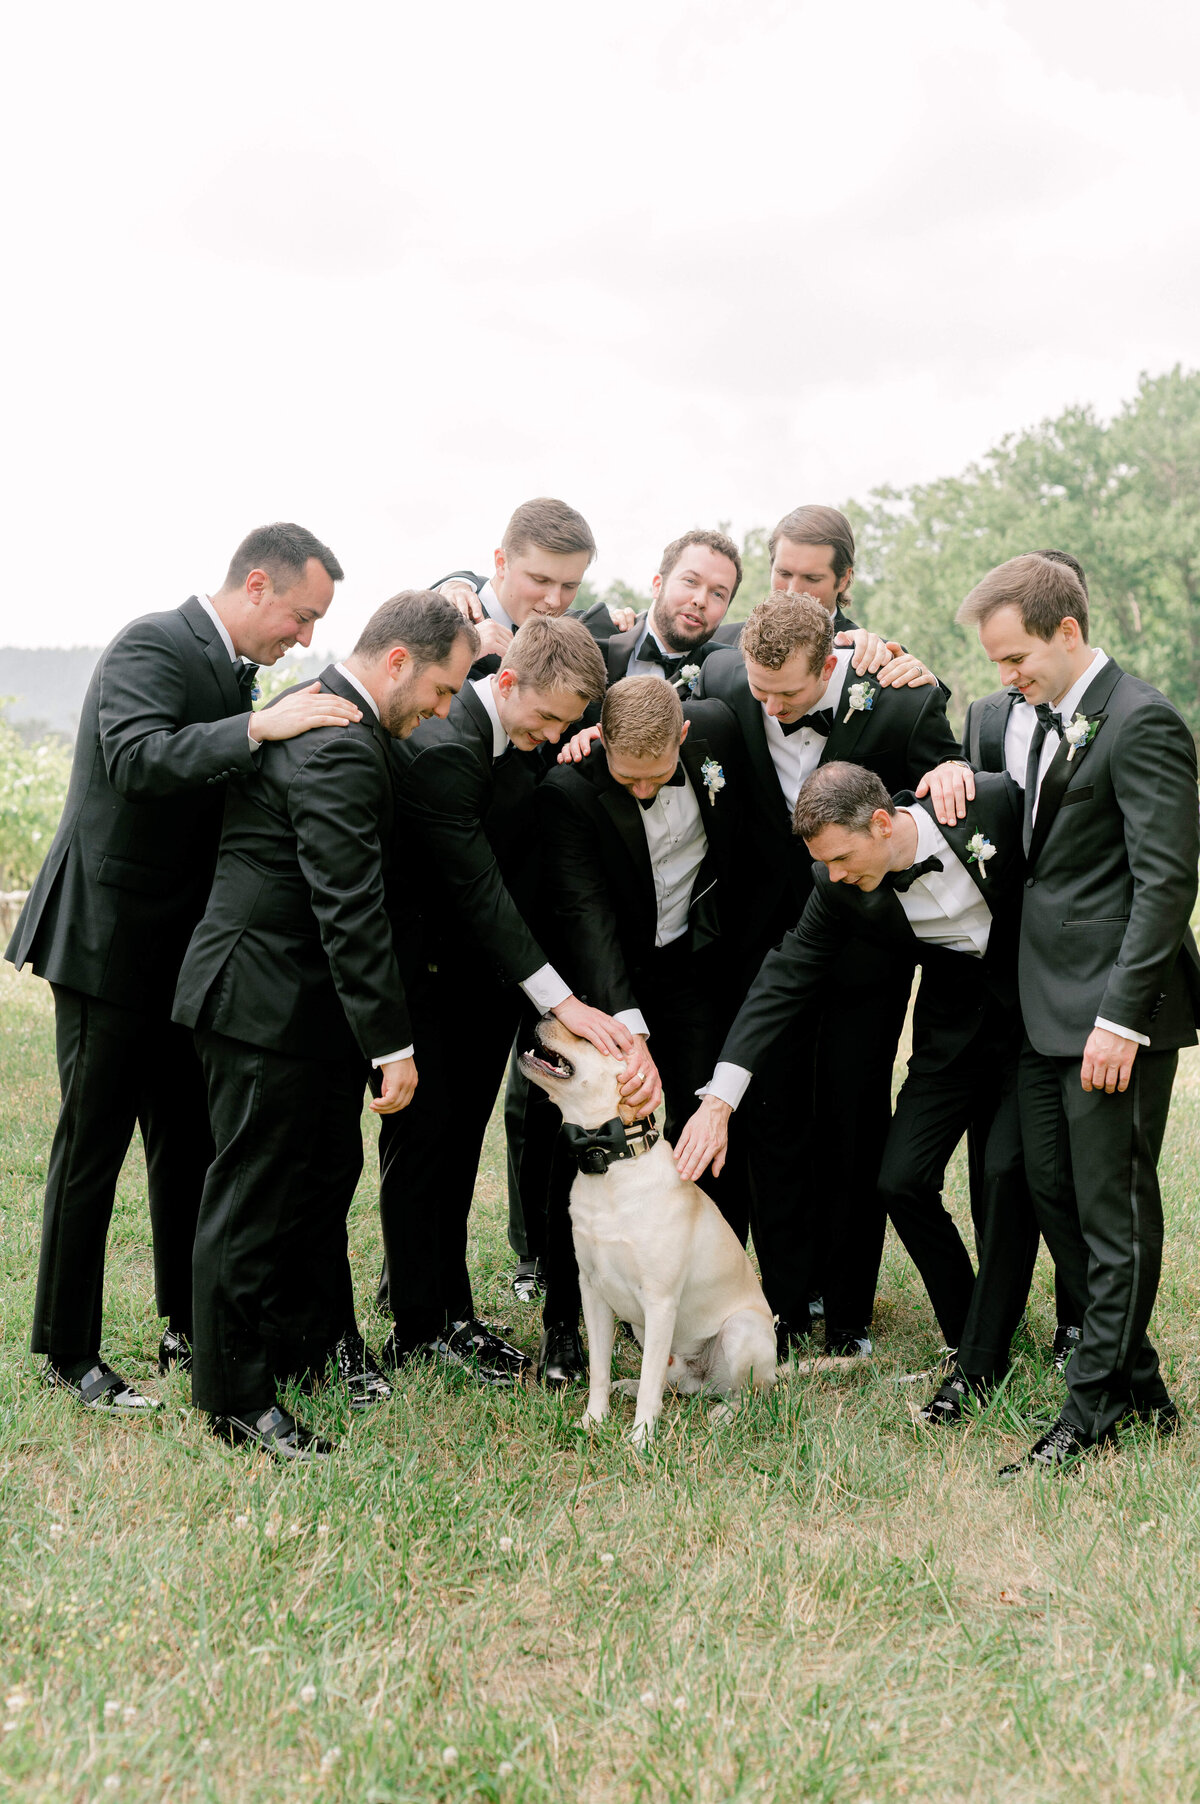 Group photo of groomsmen petting the groom's dog